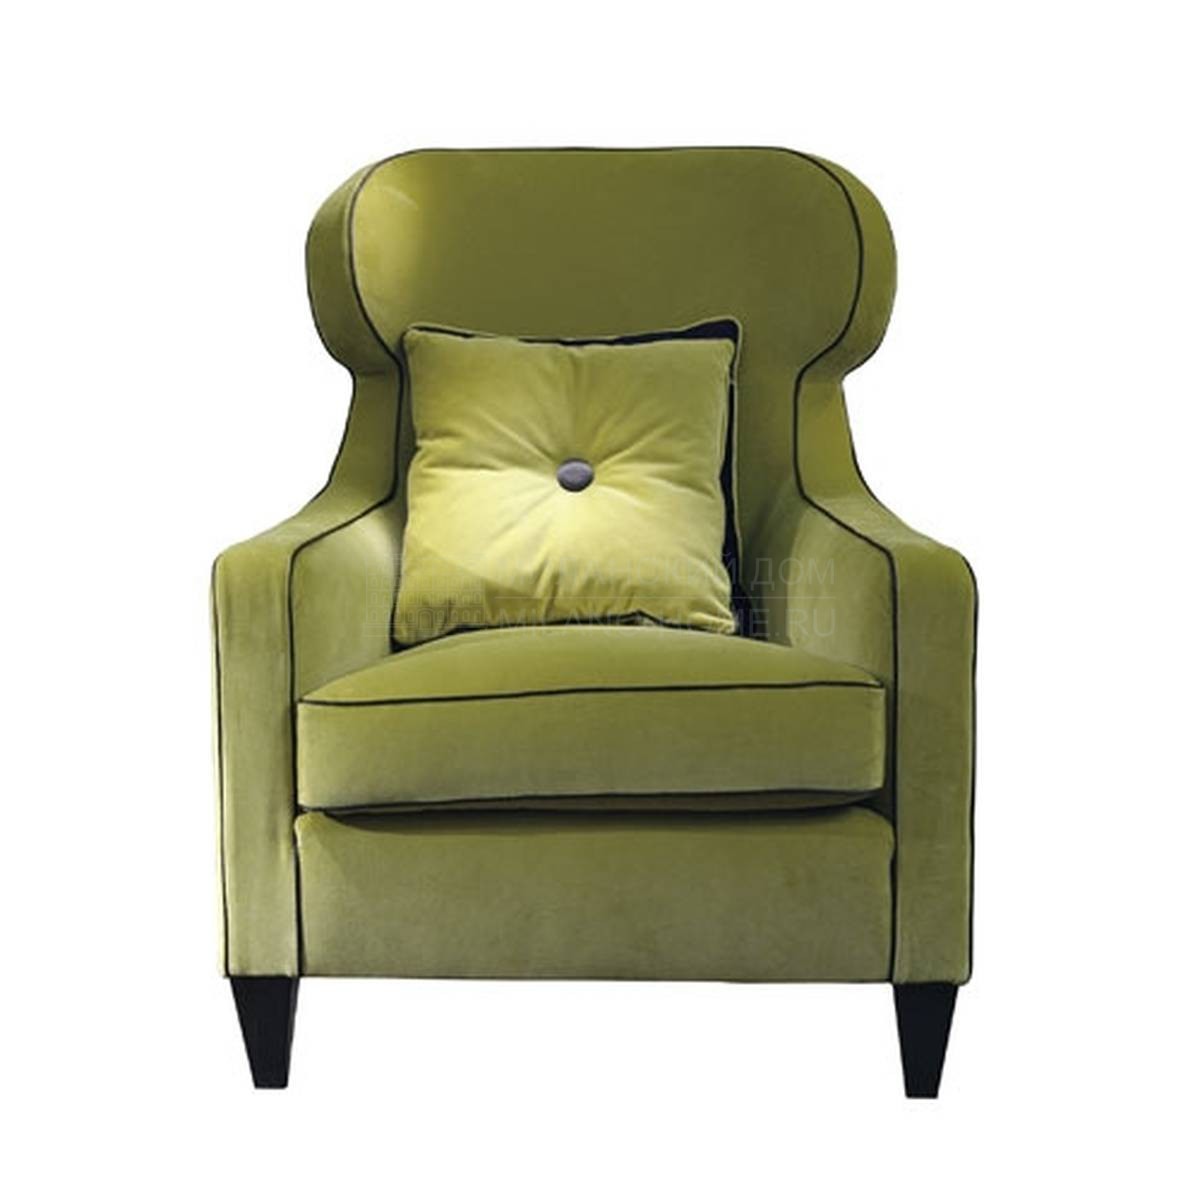 Каминное кресло Agata/ armchair из Италии фабрики SOFTHOUSE